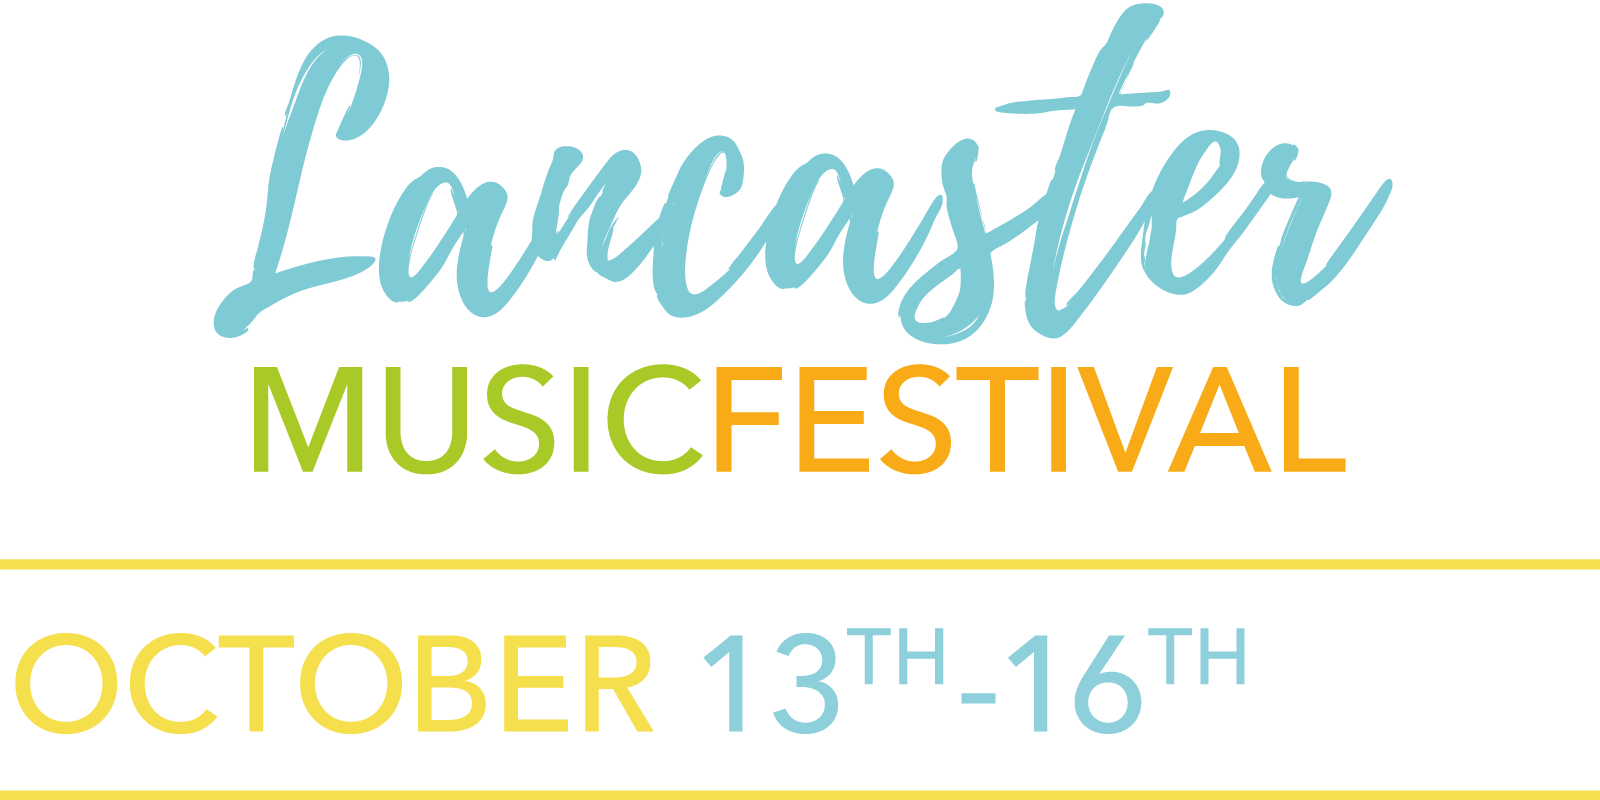 Lancaster Music Festival, October 13th - 16th 2022